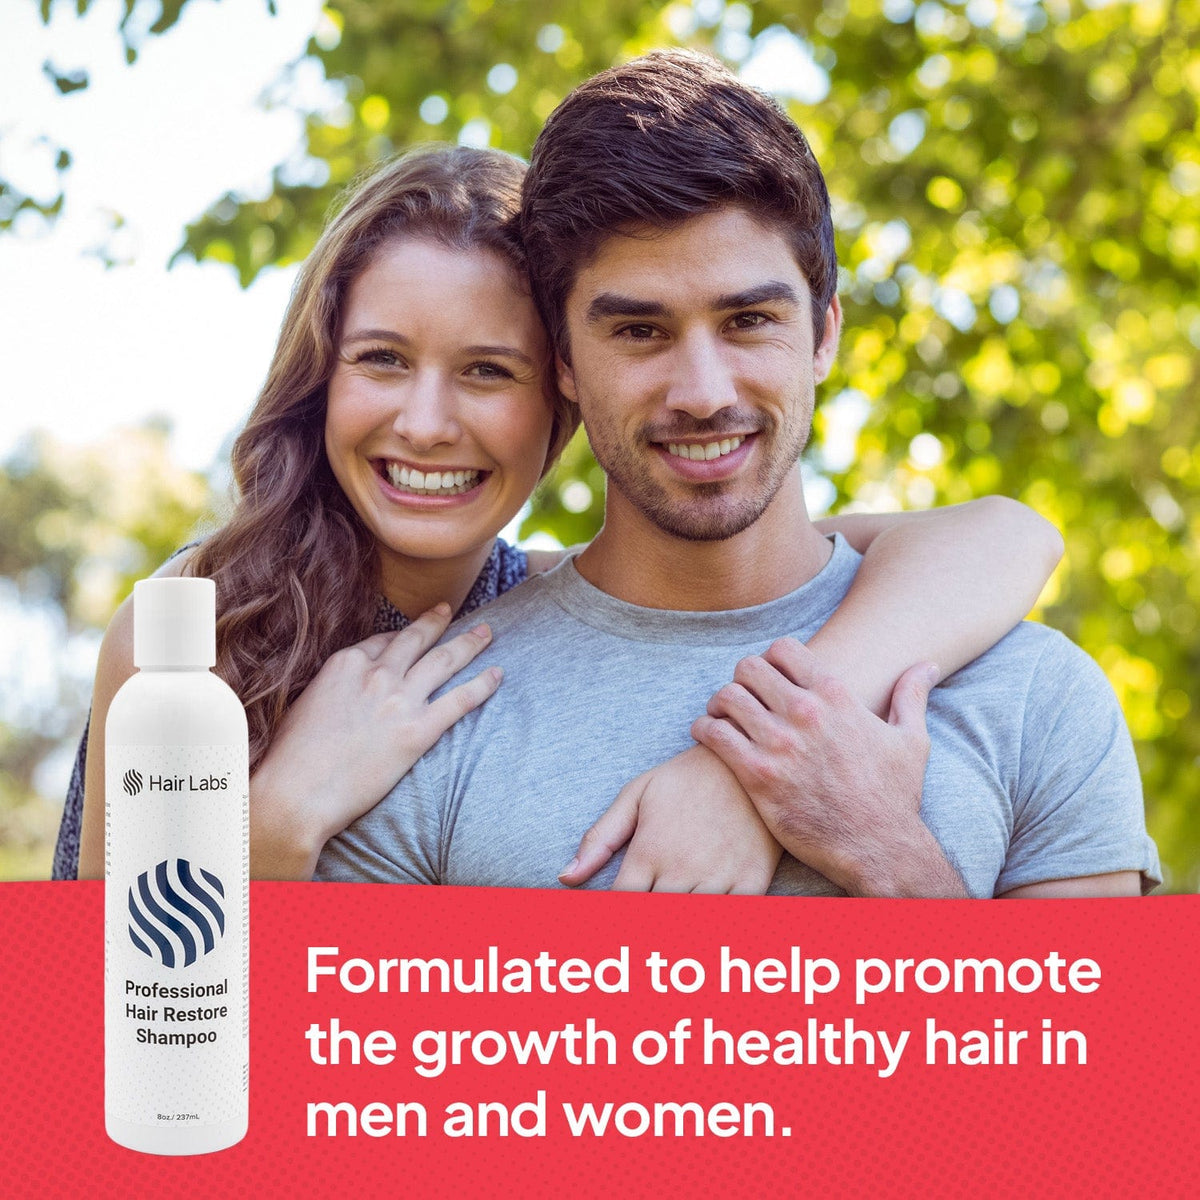 dht-blocking-products Hair loss shampoo Professional Strength Hair Restore Shampoo